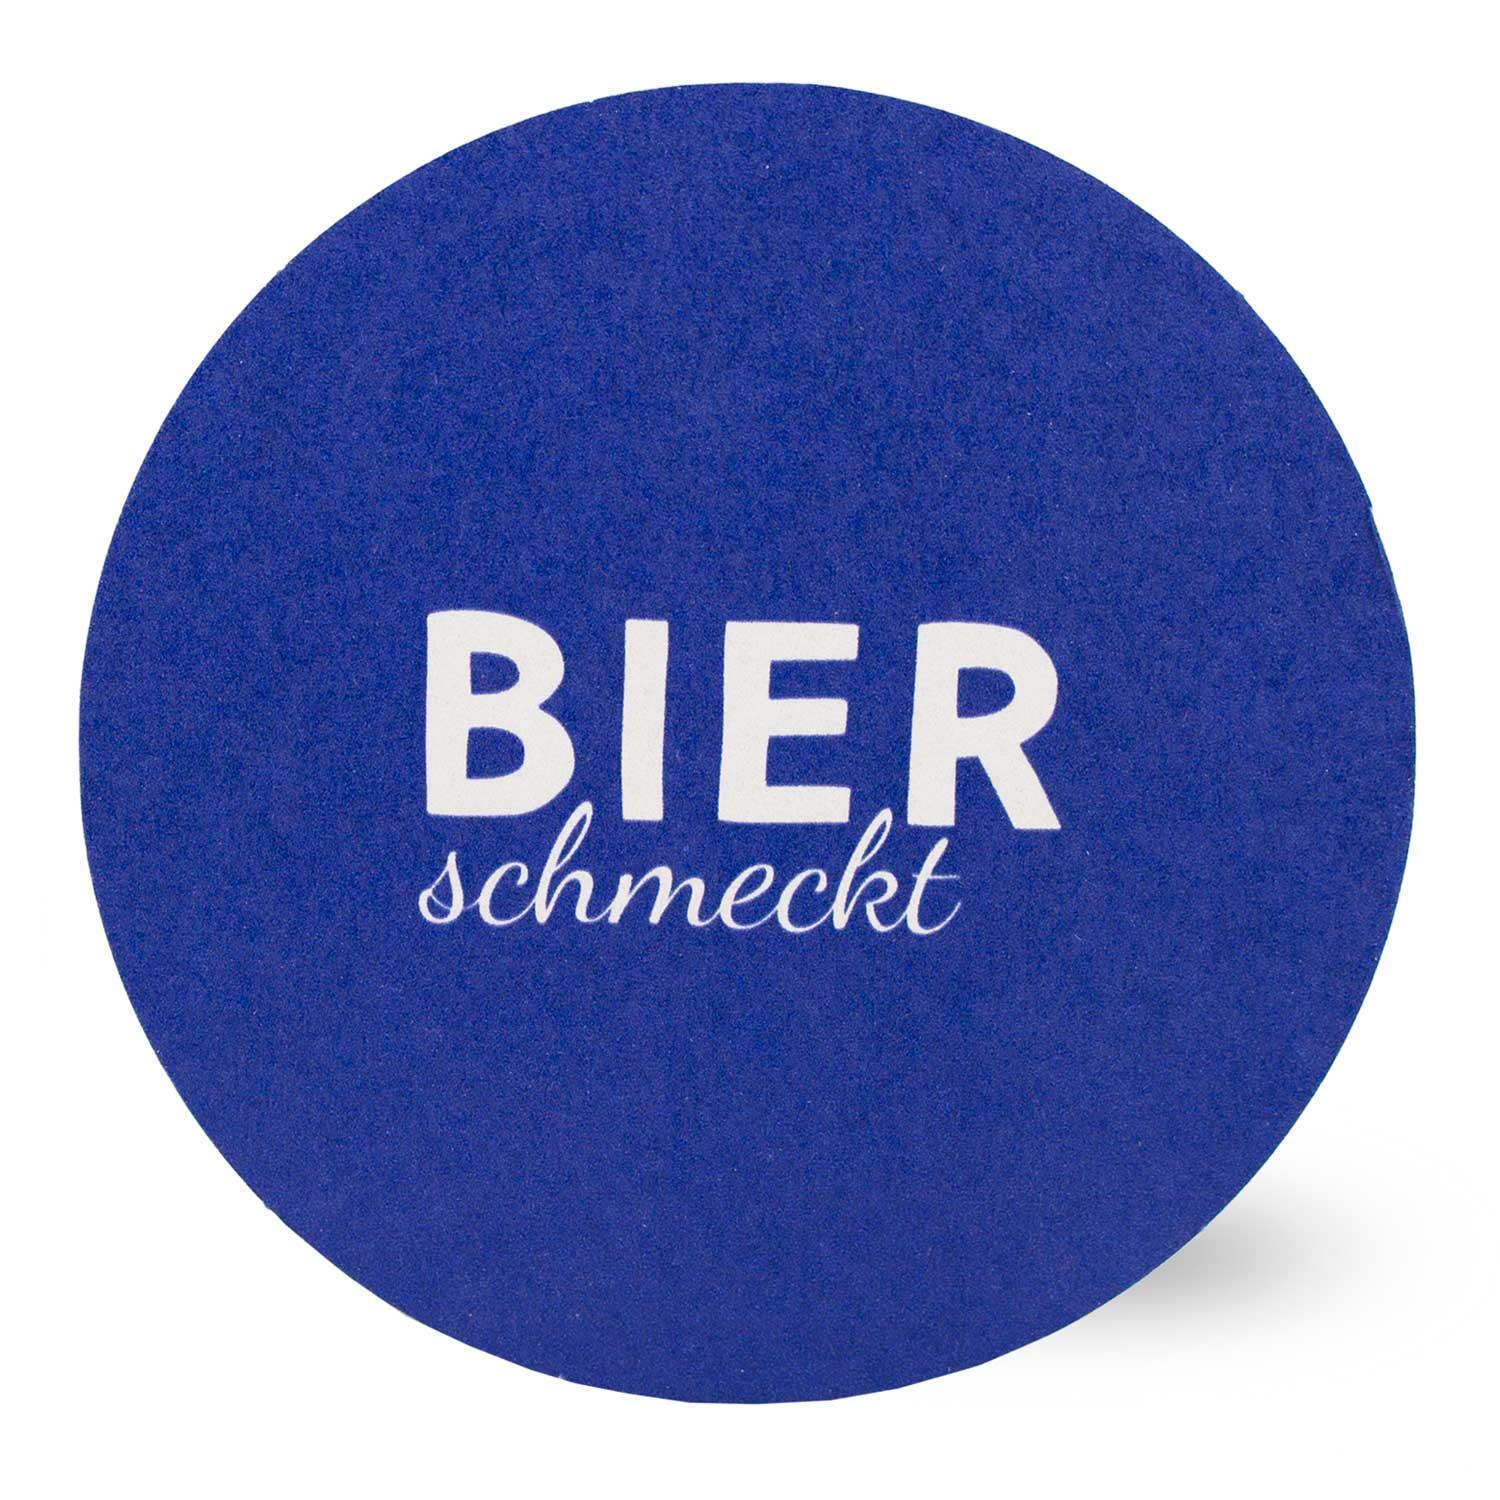 Bierfuizl "Bier schmeckt" - bavariashop - mei LebensGfui